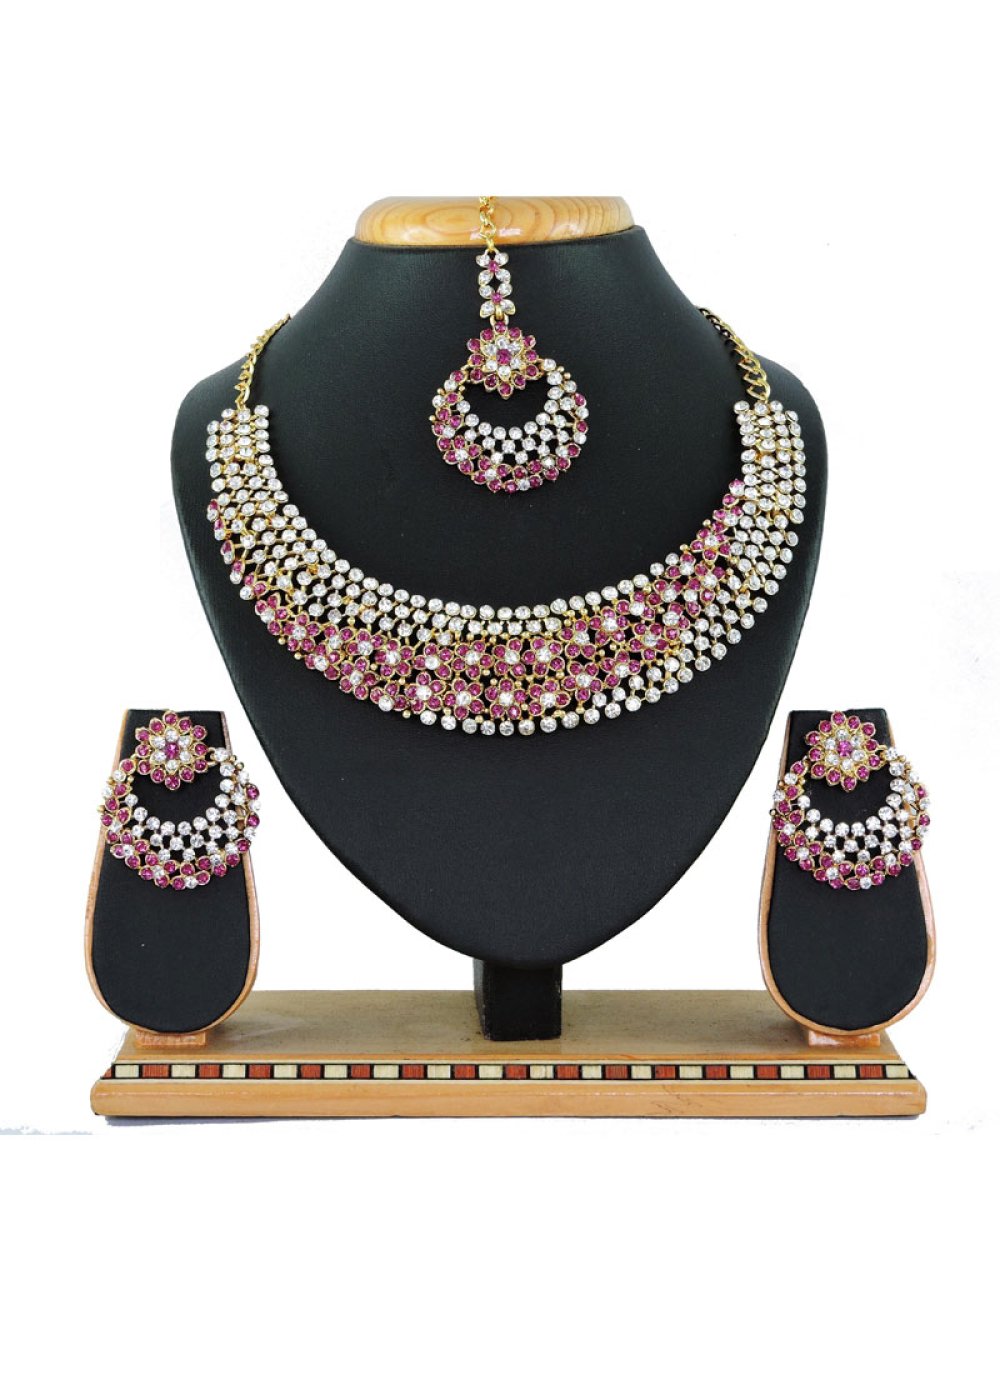 Glitzy Stone Work Hot Pink and White Gold Rodium Polish Necklace Set